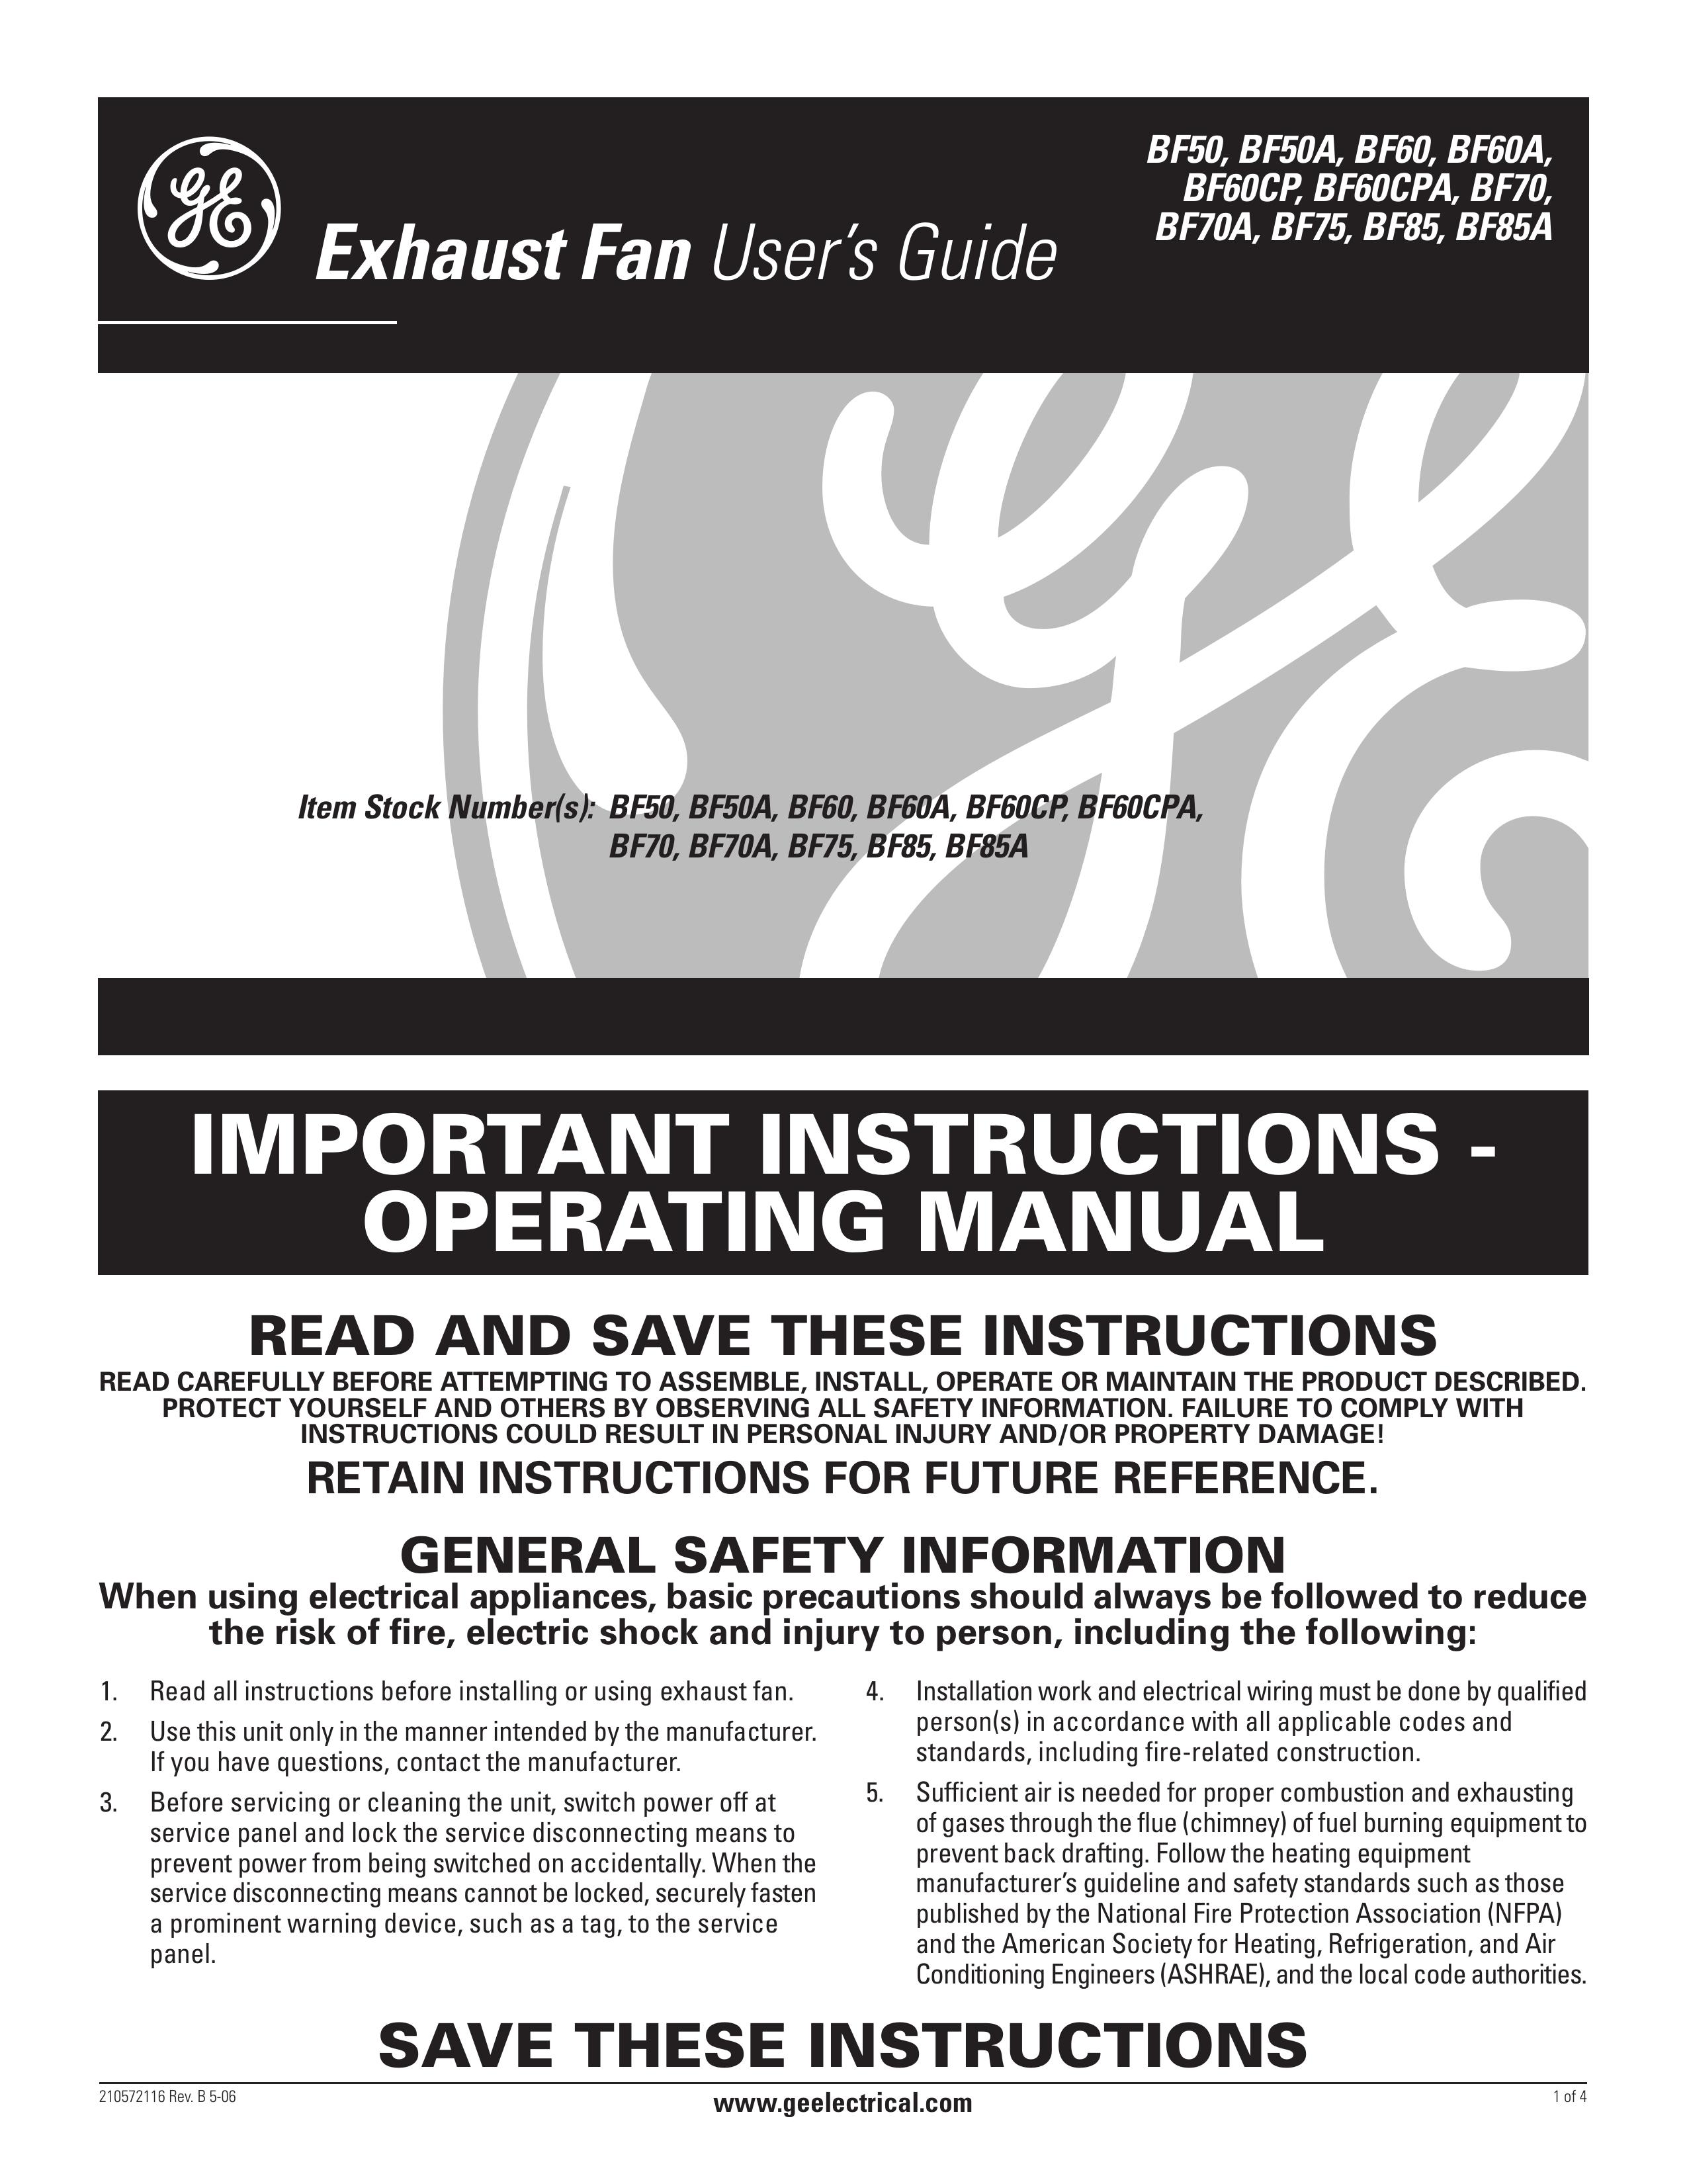 GE BF50 Ventilation Hood User Manual